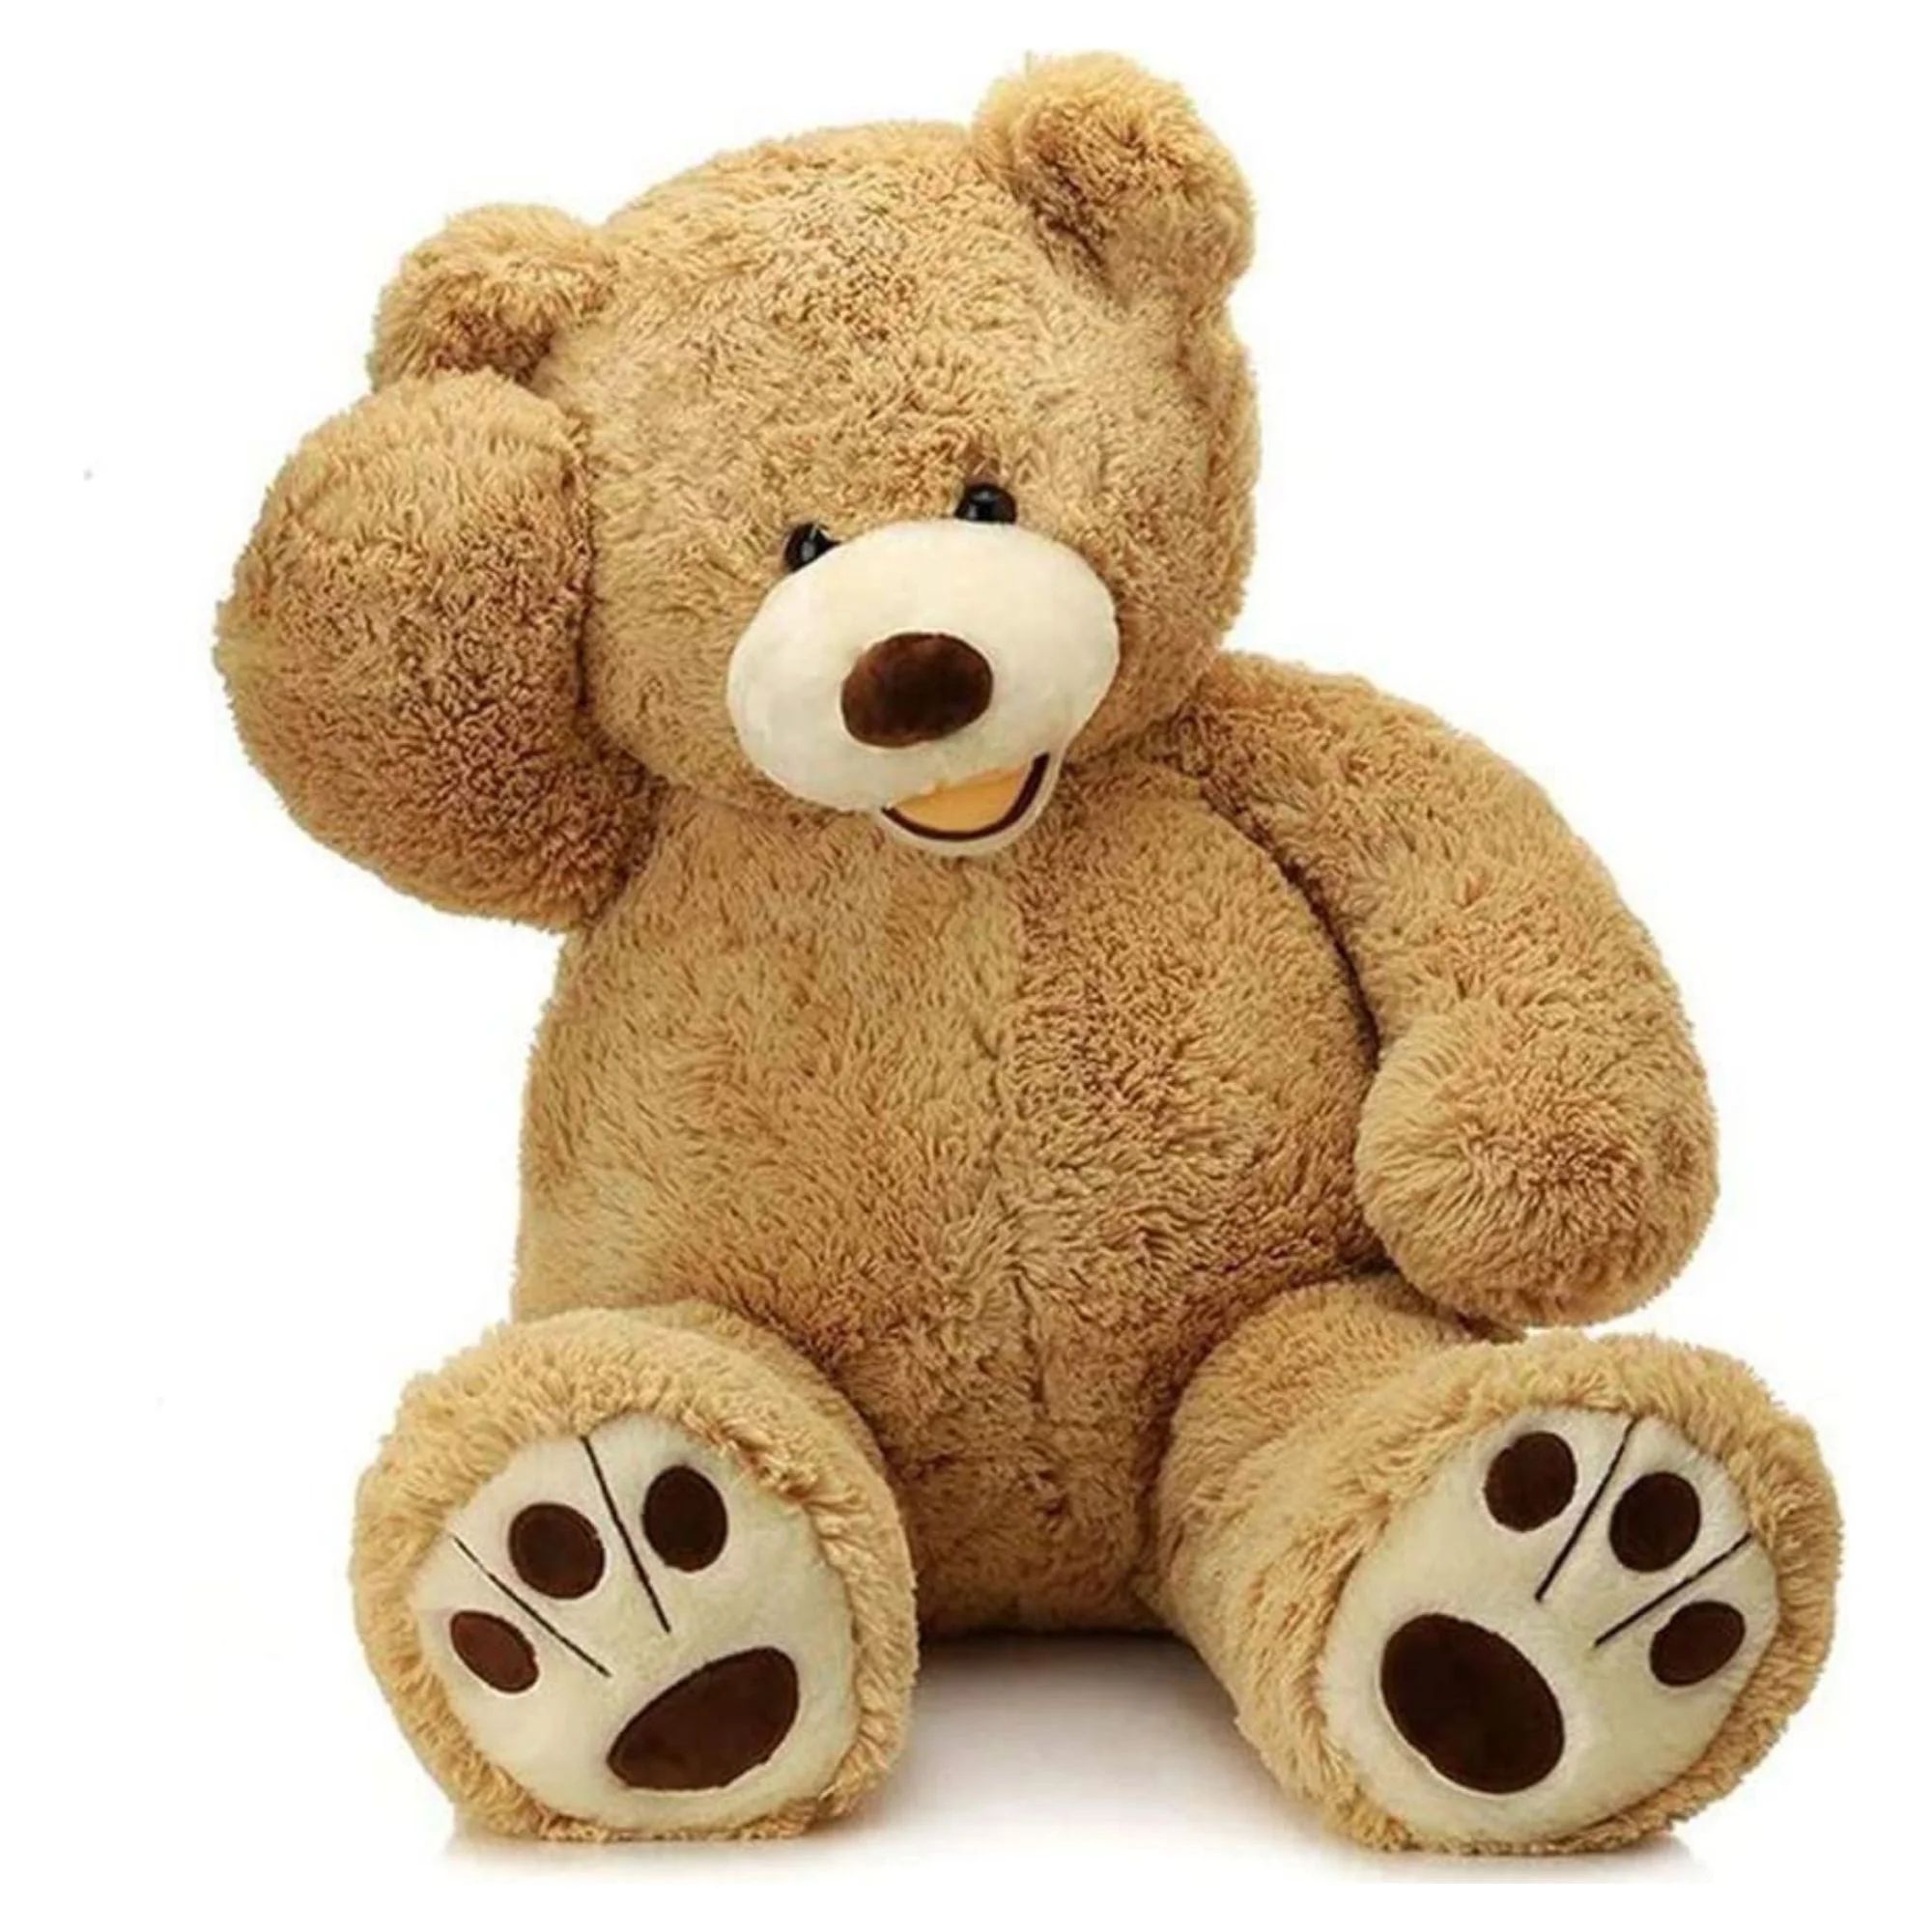 MorisMos Stuffed Animal Giant Teddy Bear with Footprints 39'' Plush Toy | Walmart (US)